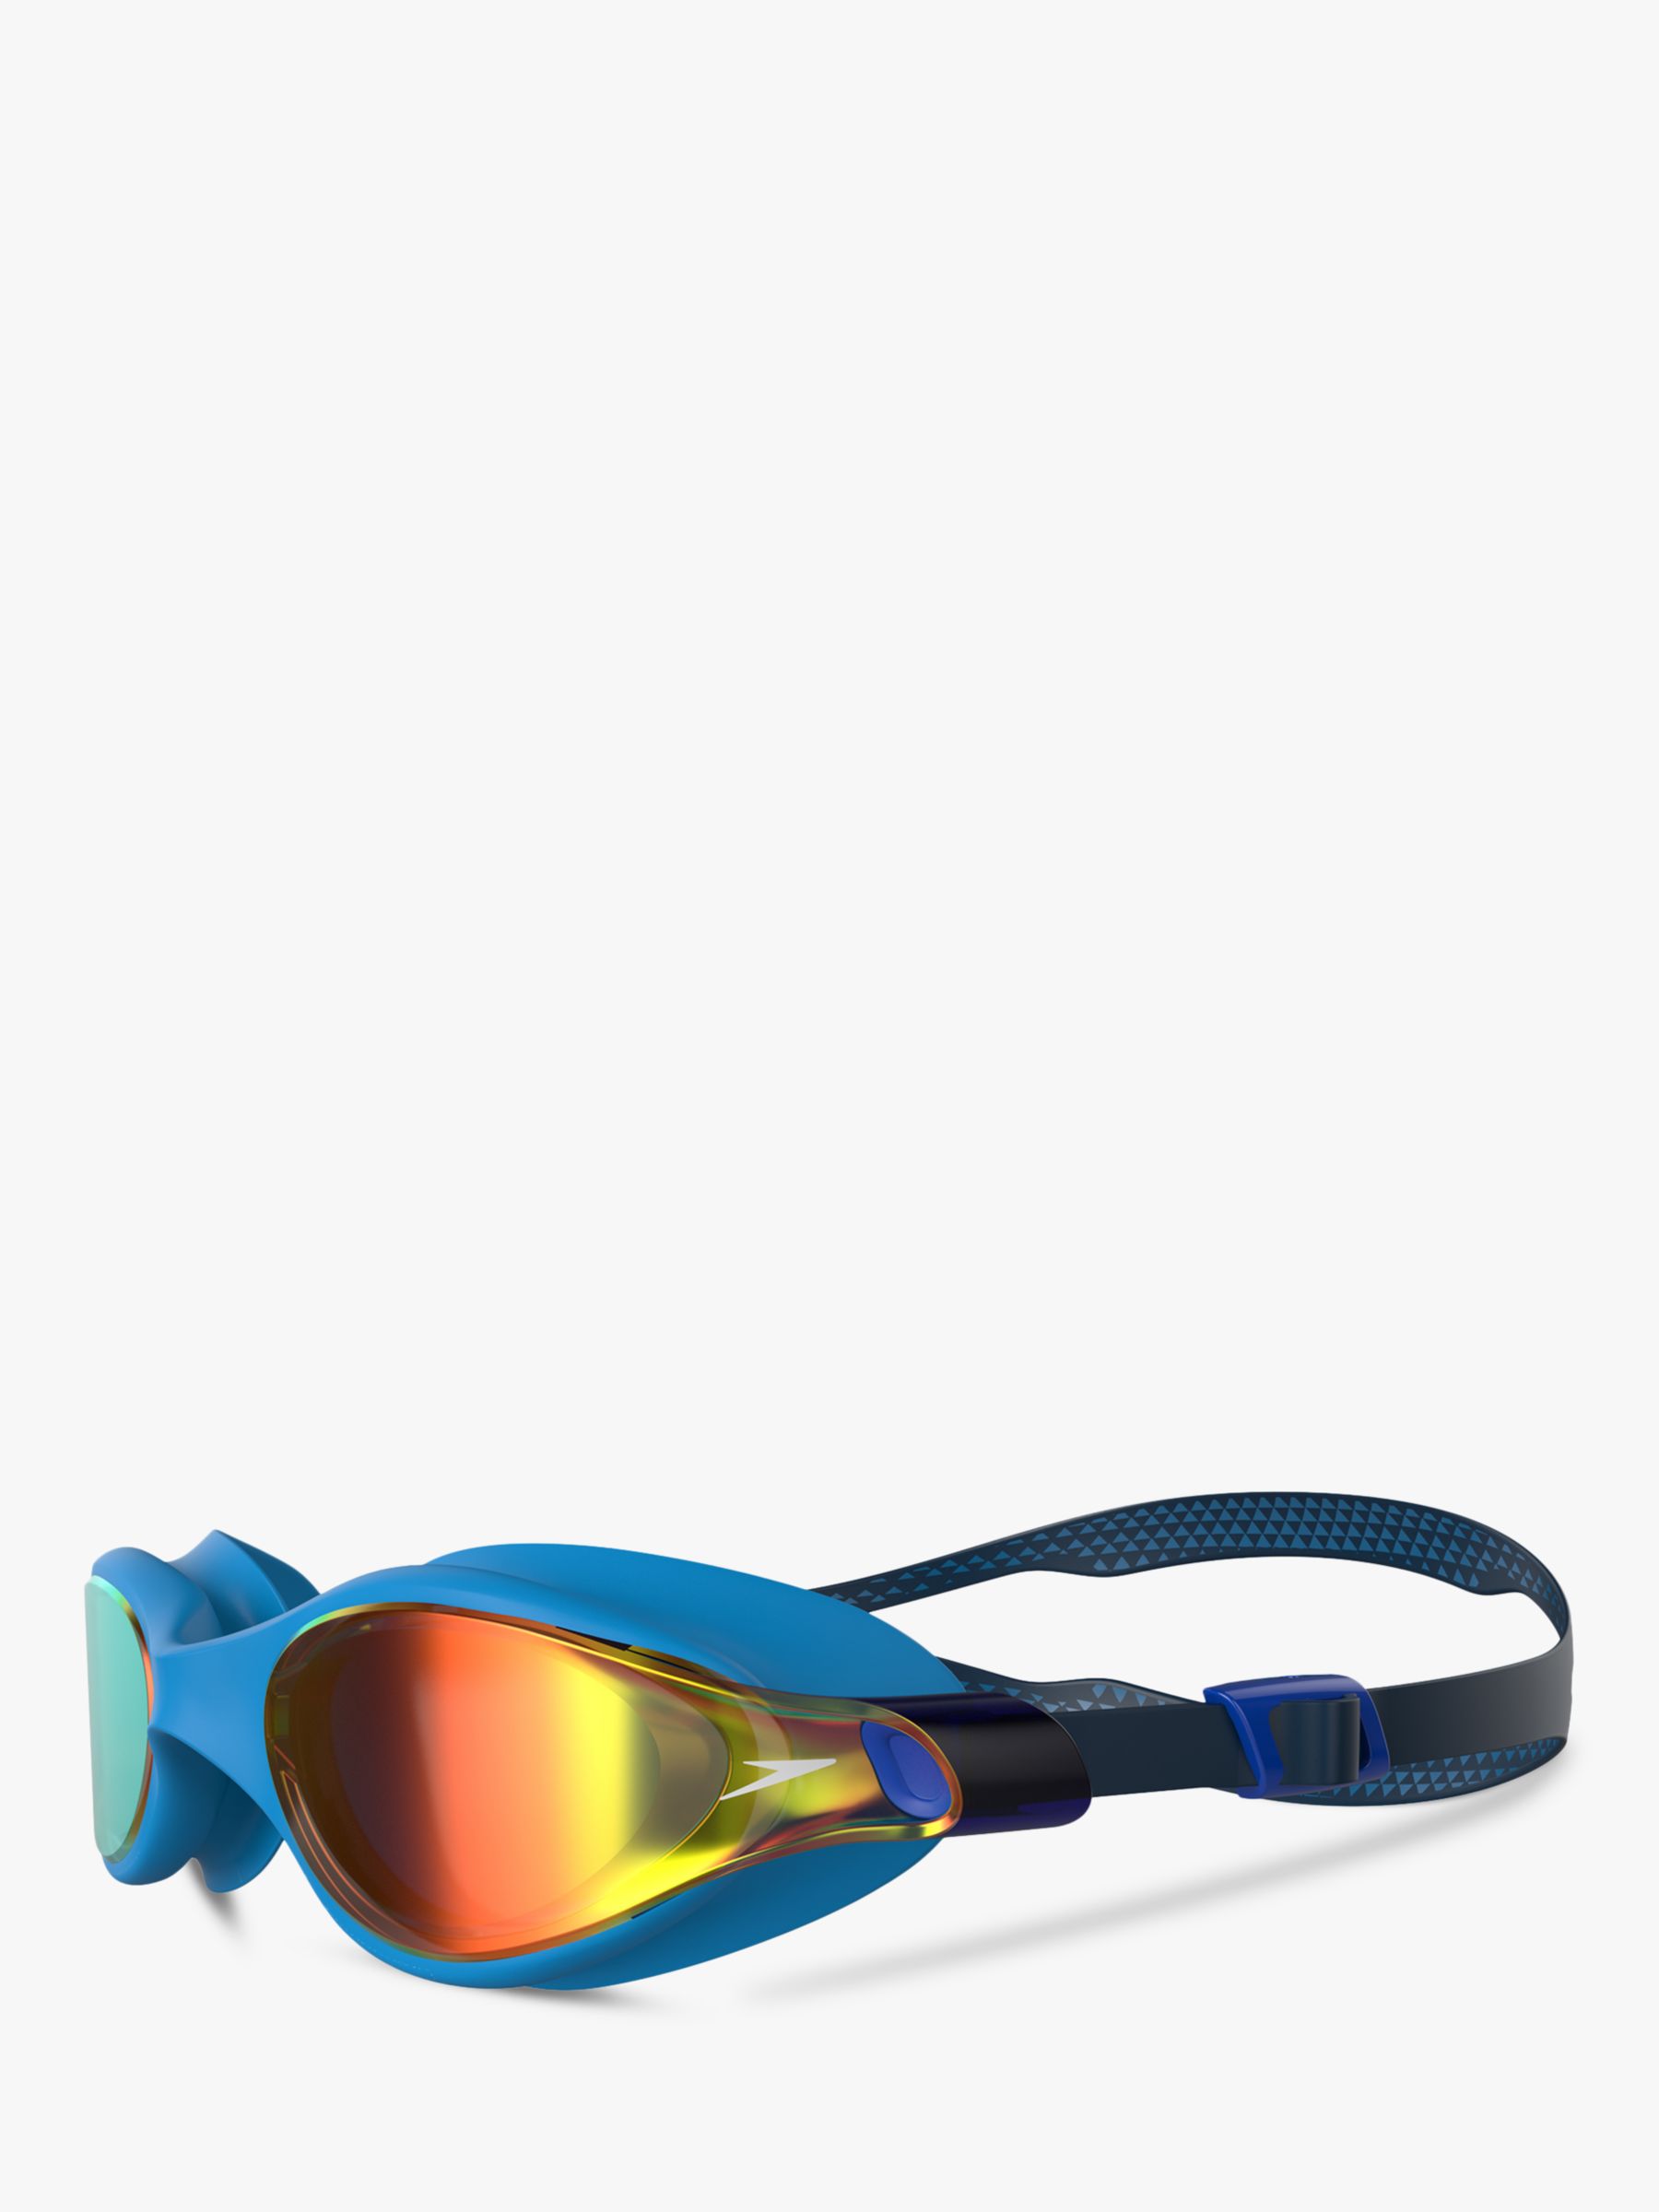 Speedo Vue Mirror Swimming Goggles, Navy/Pool/Gold Shadow